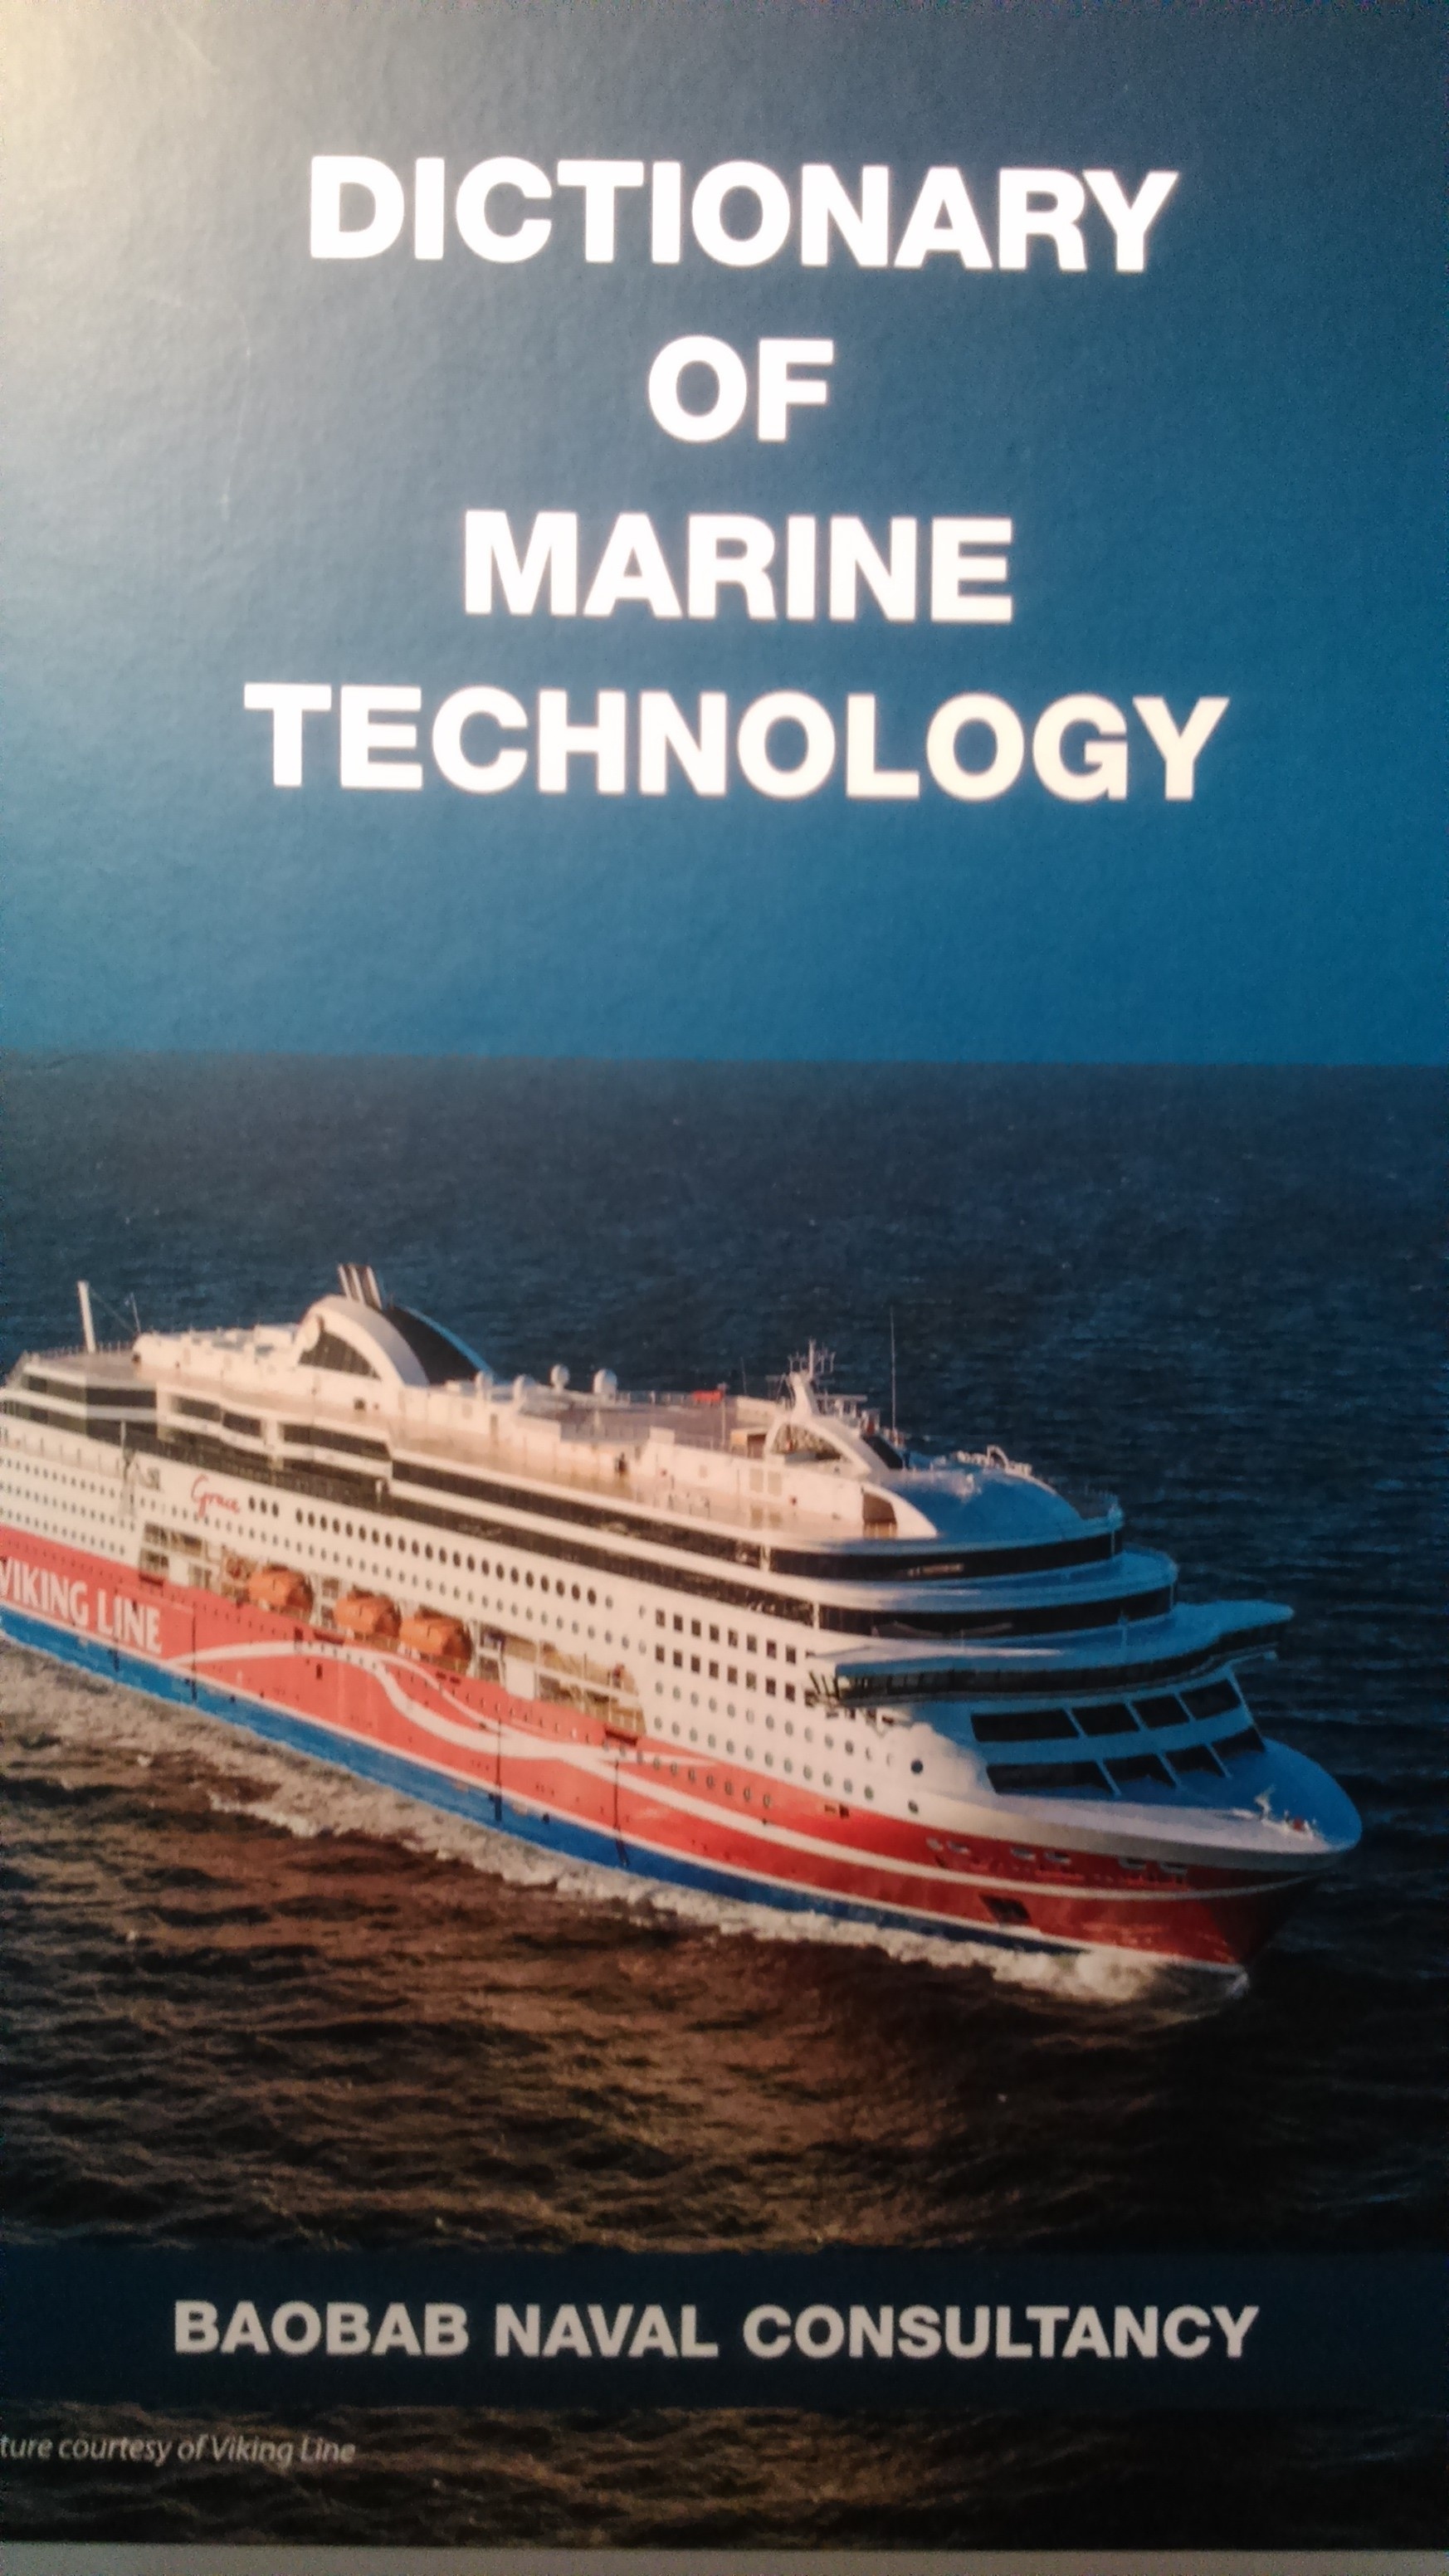 Dictionary of marine technology